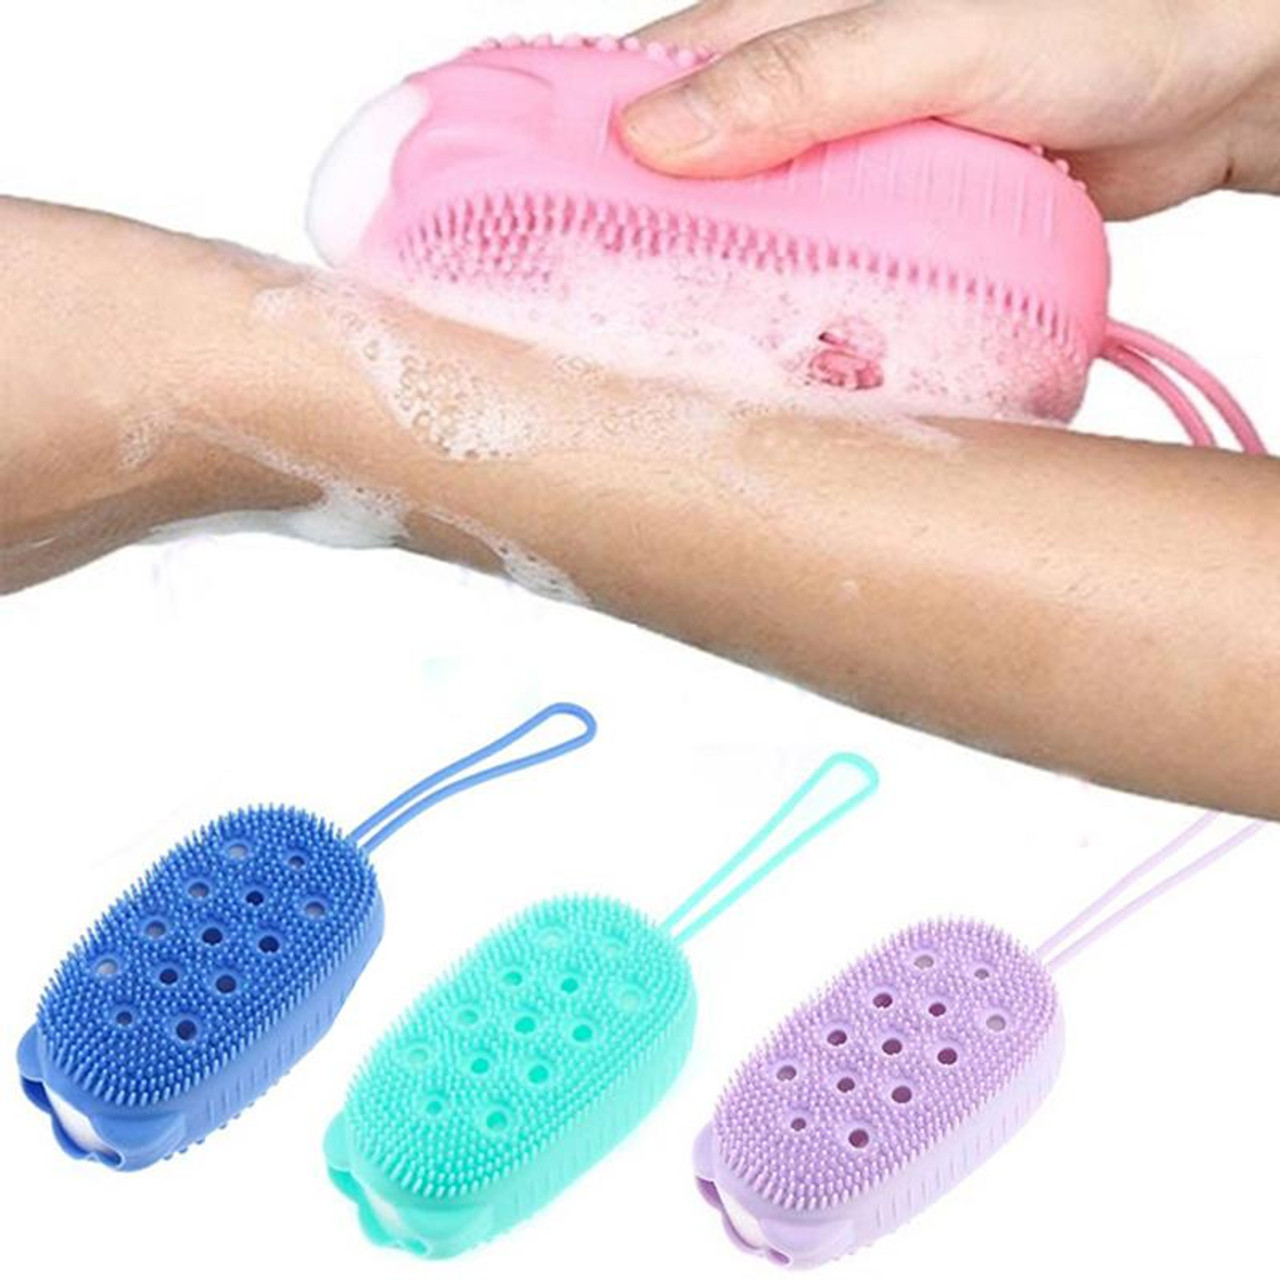 Silicone Body Scrubber Bath Sponge 2 in 1 Exfoliating Body Brush Loofah Shower